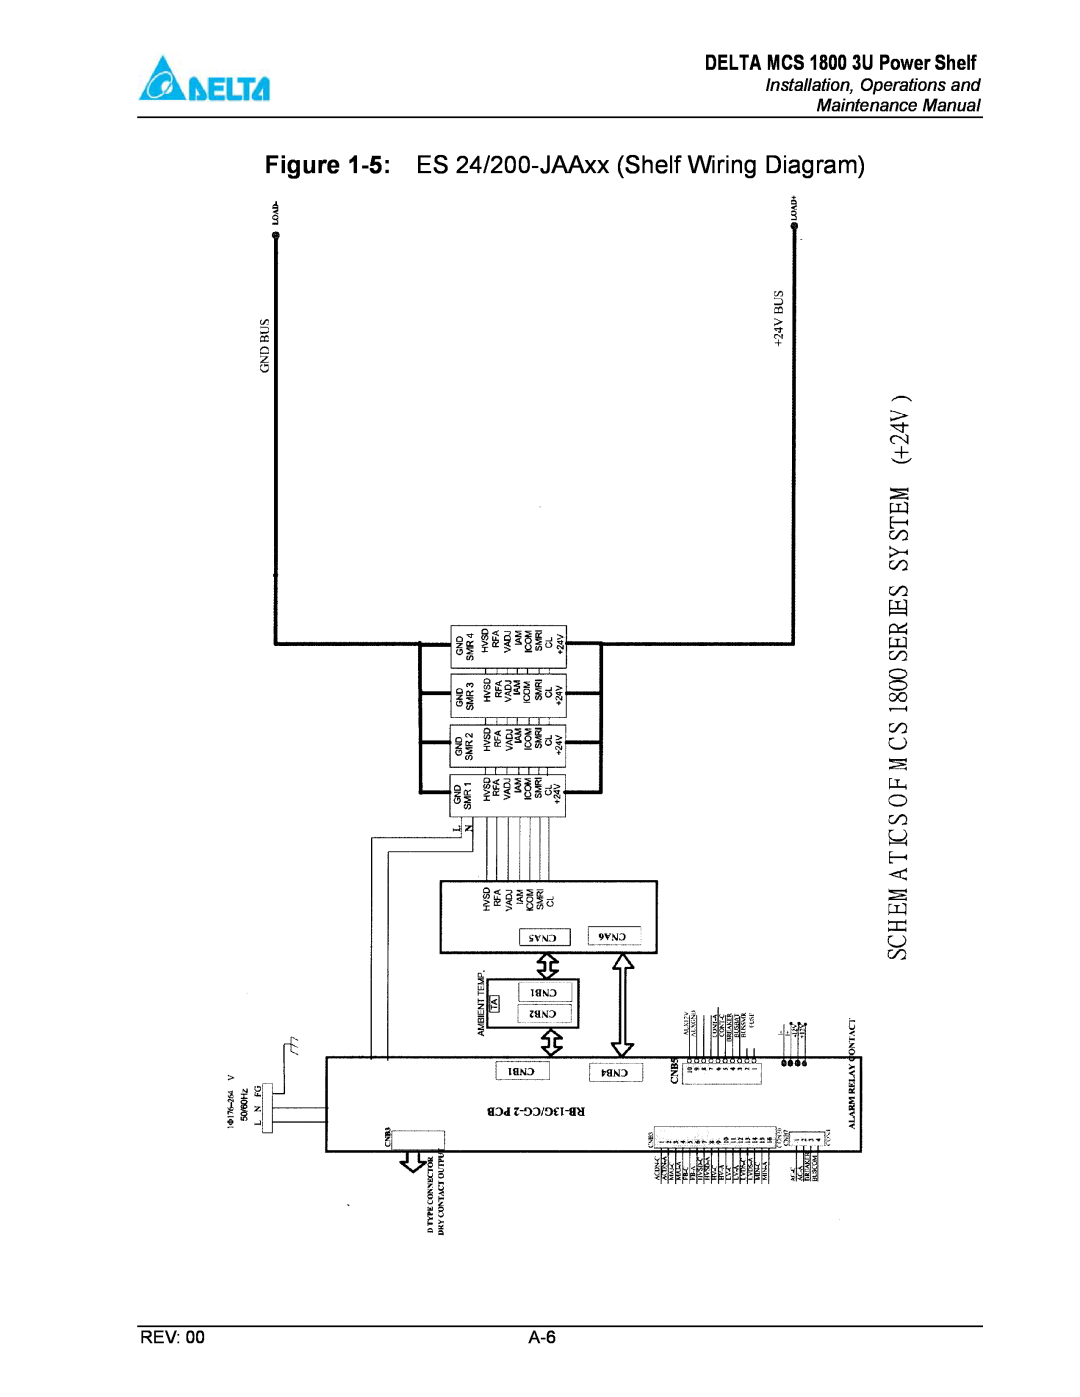 Delta MCS-1800 manual 5 ES 24/200-JAAxx Shelf Wiring Diagram, DELTA MCS 1800 3U Power Shelf 